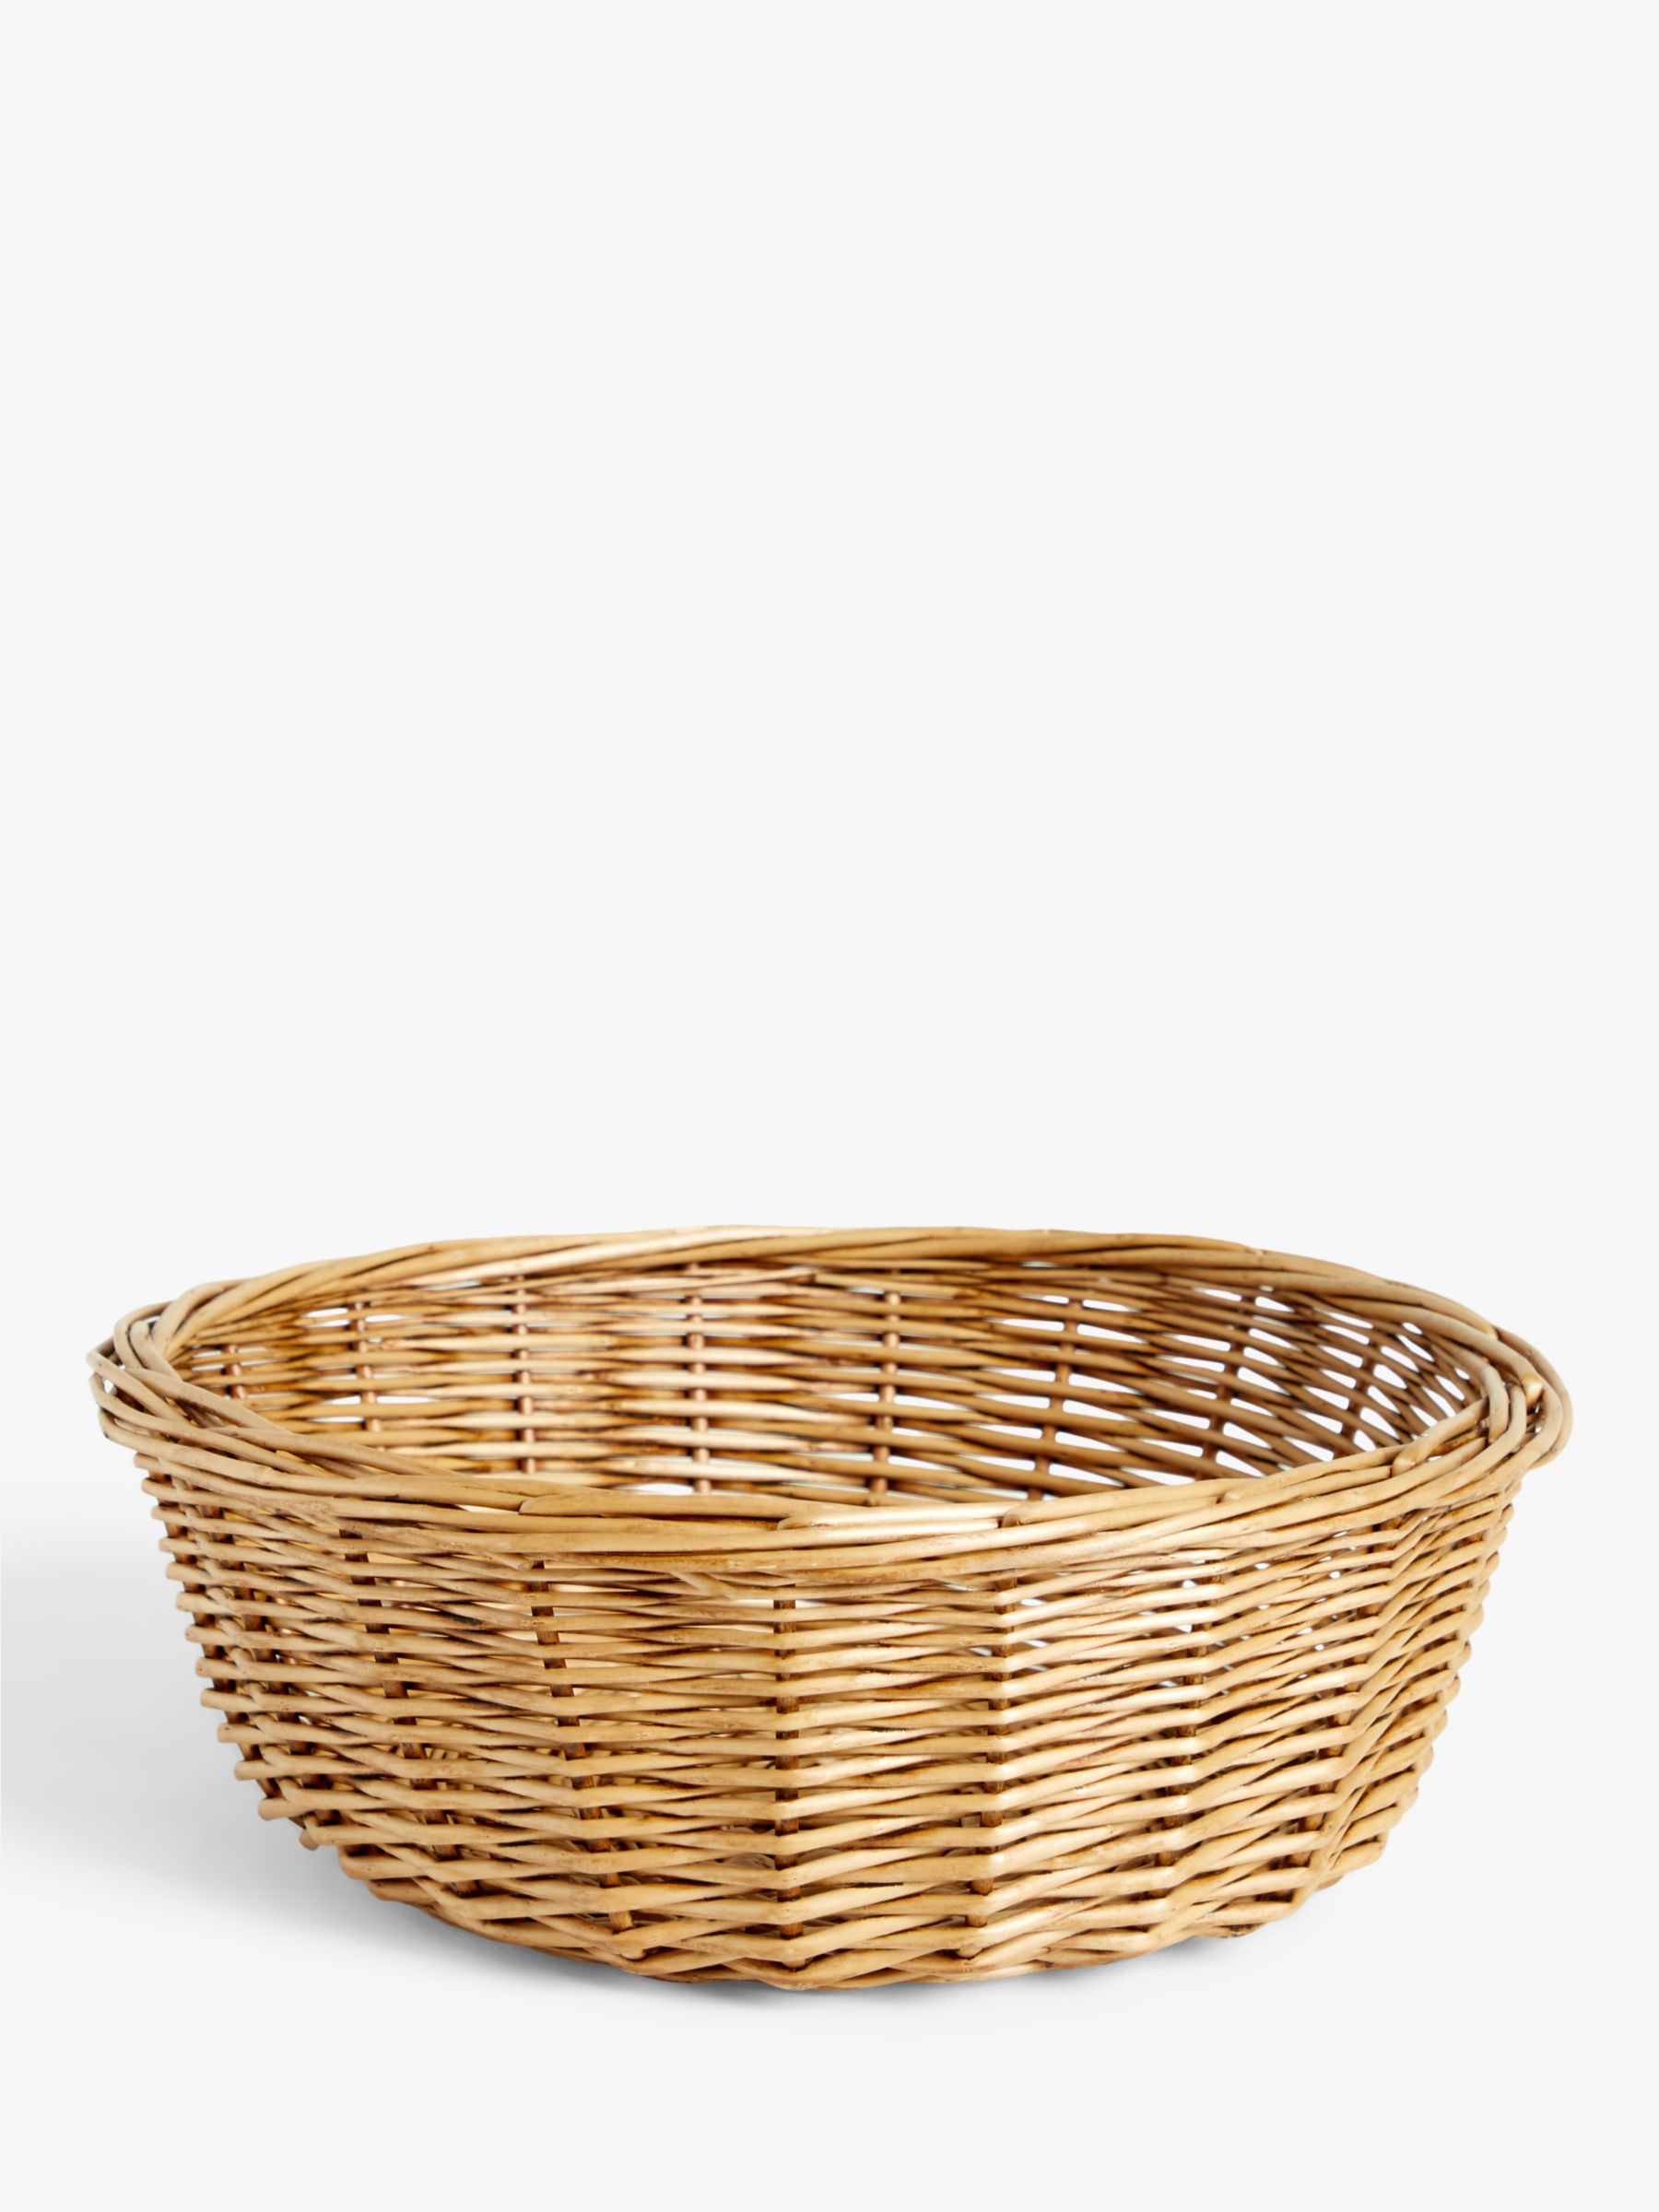 John Lewis Round Willow Wicker Bread Basket, 30cm, Natural